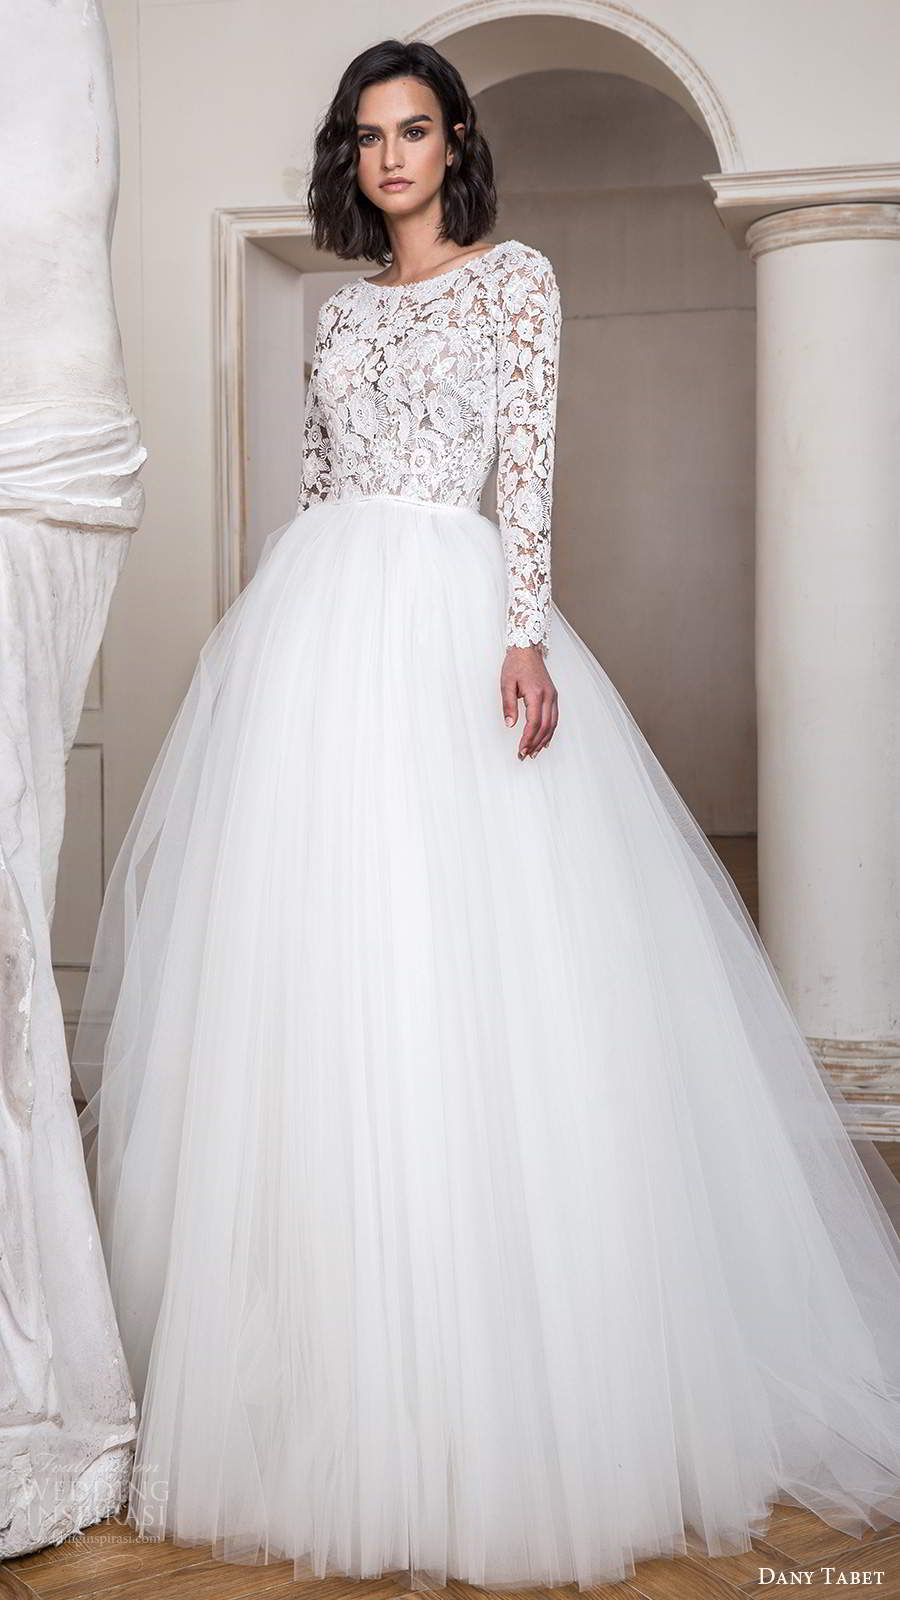 dany tabet 2020 bridal long sleeves jewel neckline embellished lace bodice a line ball gown wedding dress chapel train (5) mv